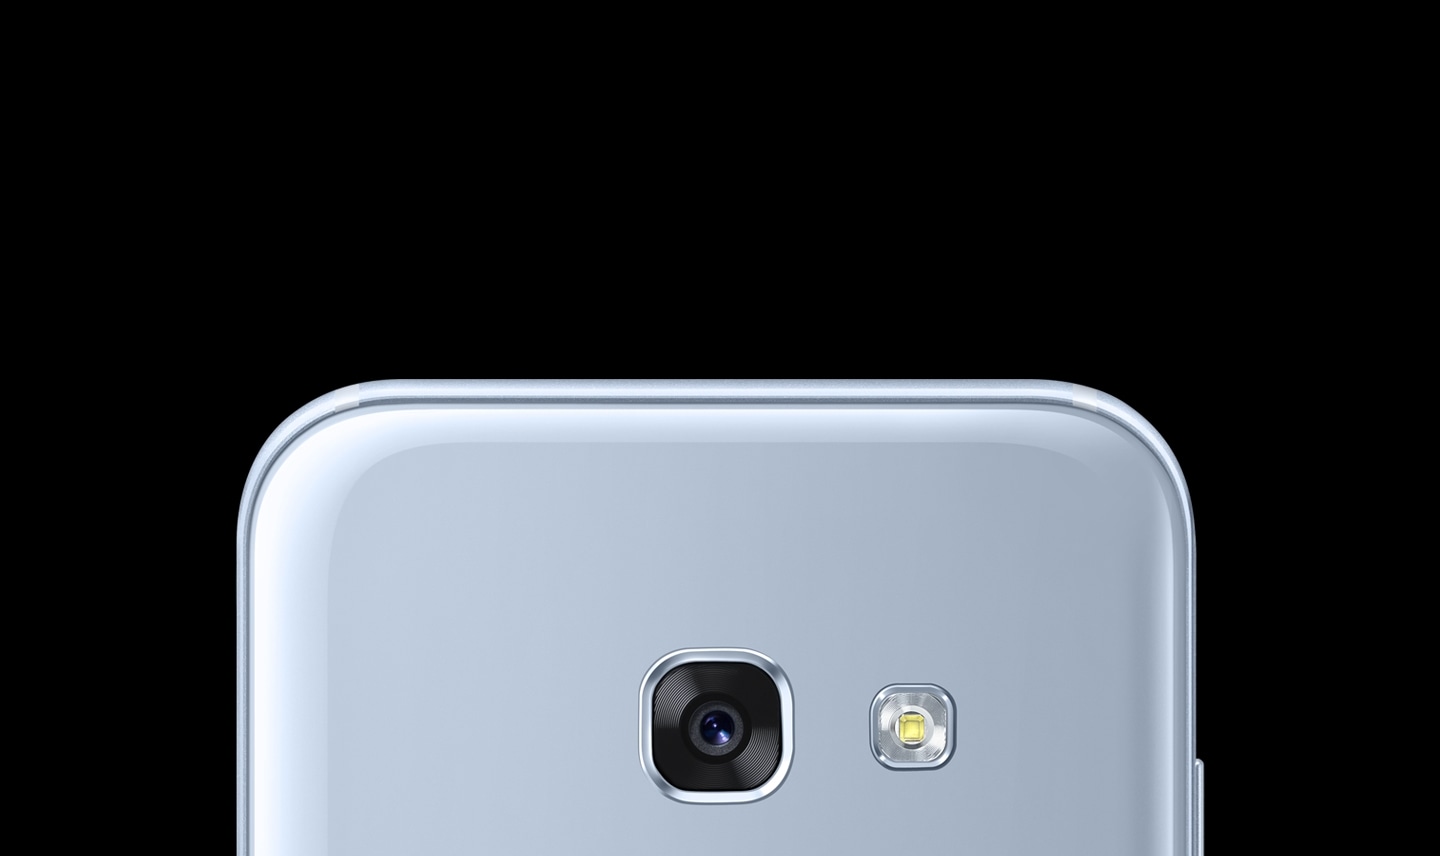 Close up of the Galaxy A5 (2017) rear camera